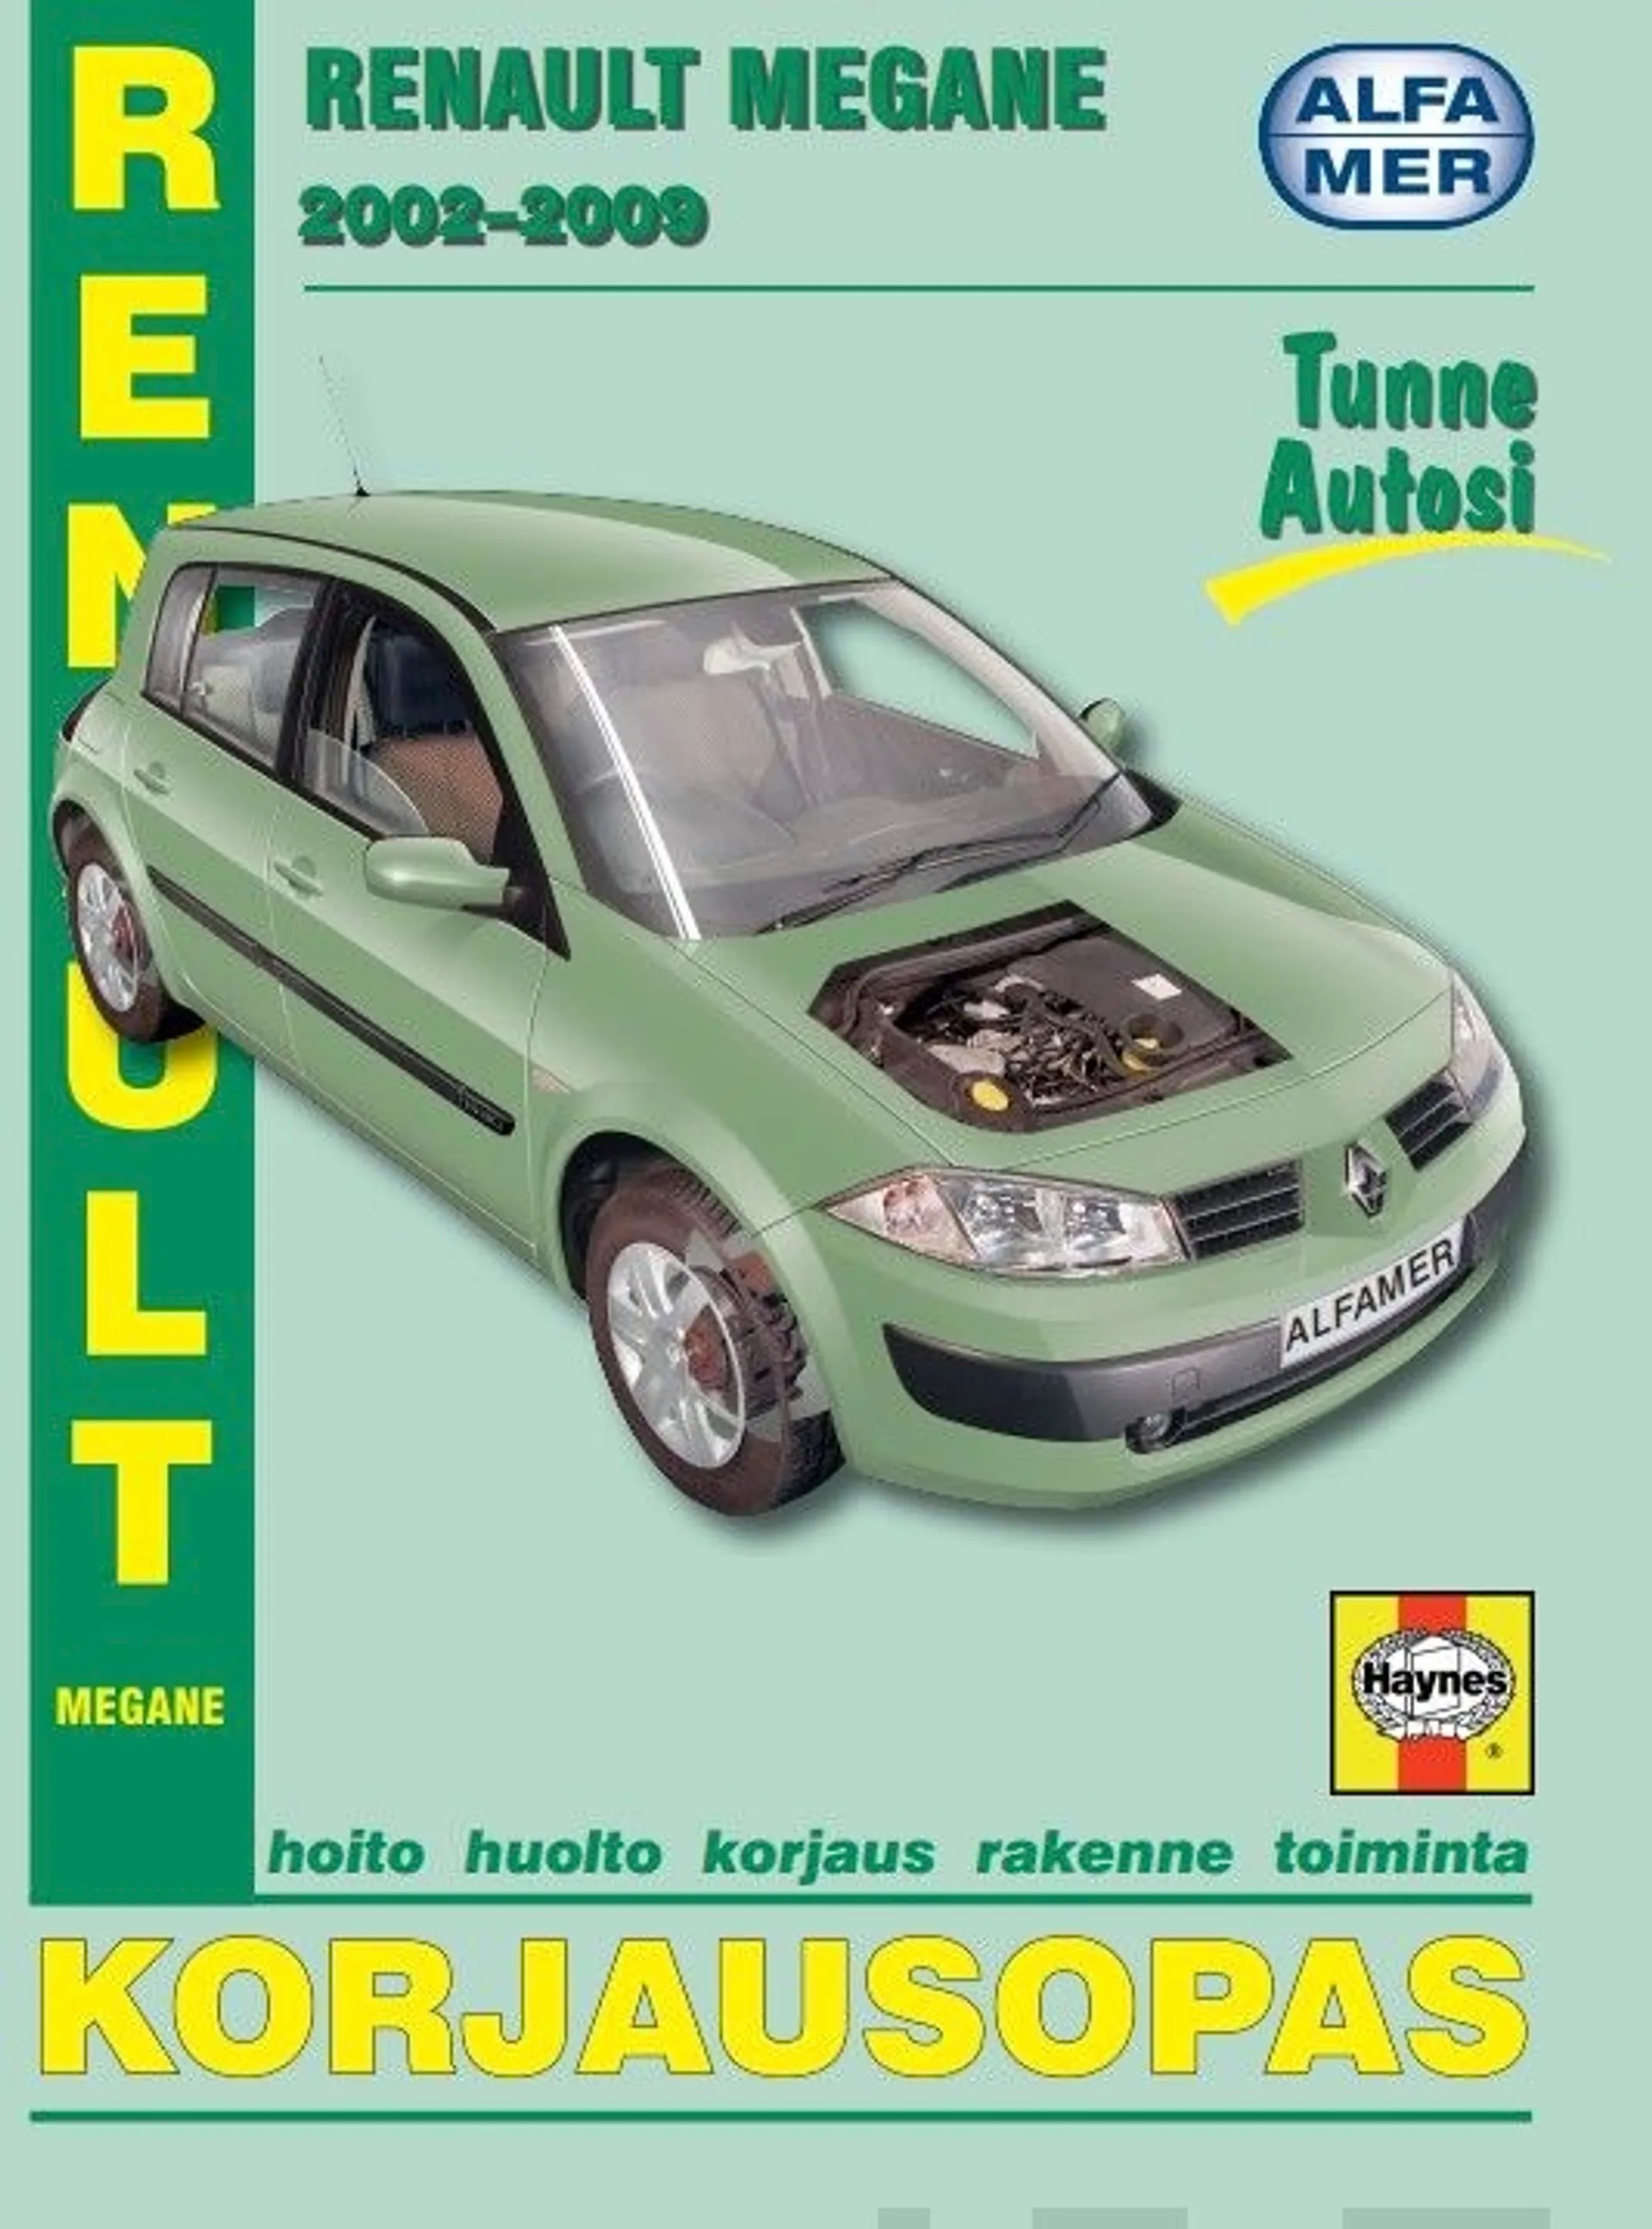 Mauno, Renault Megane 2002-2009